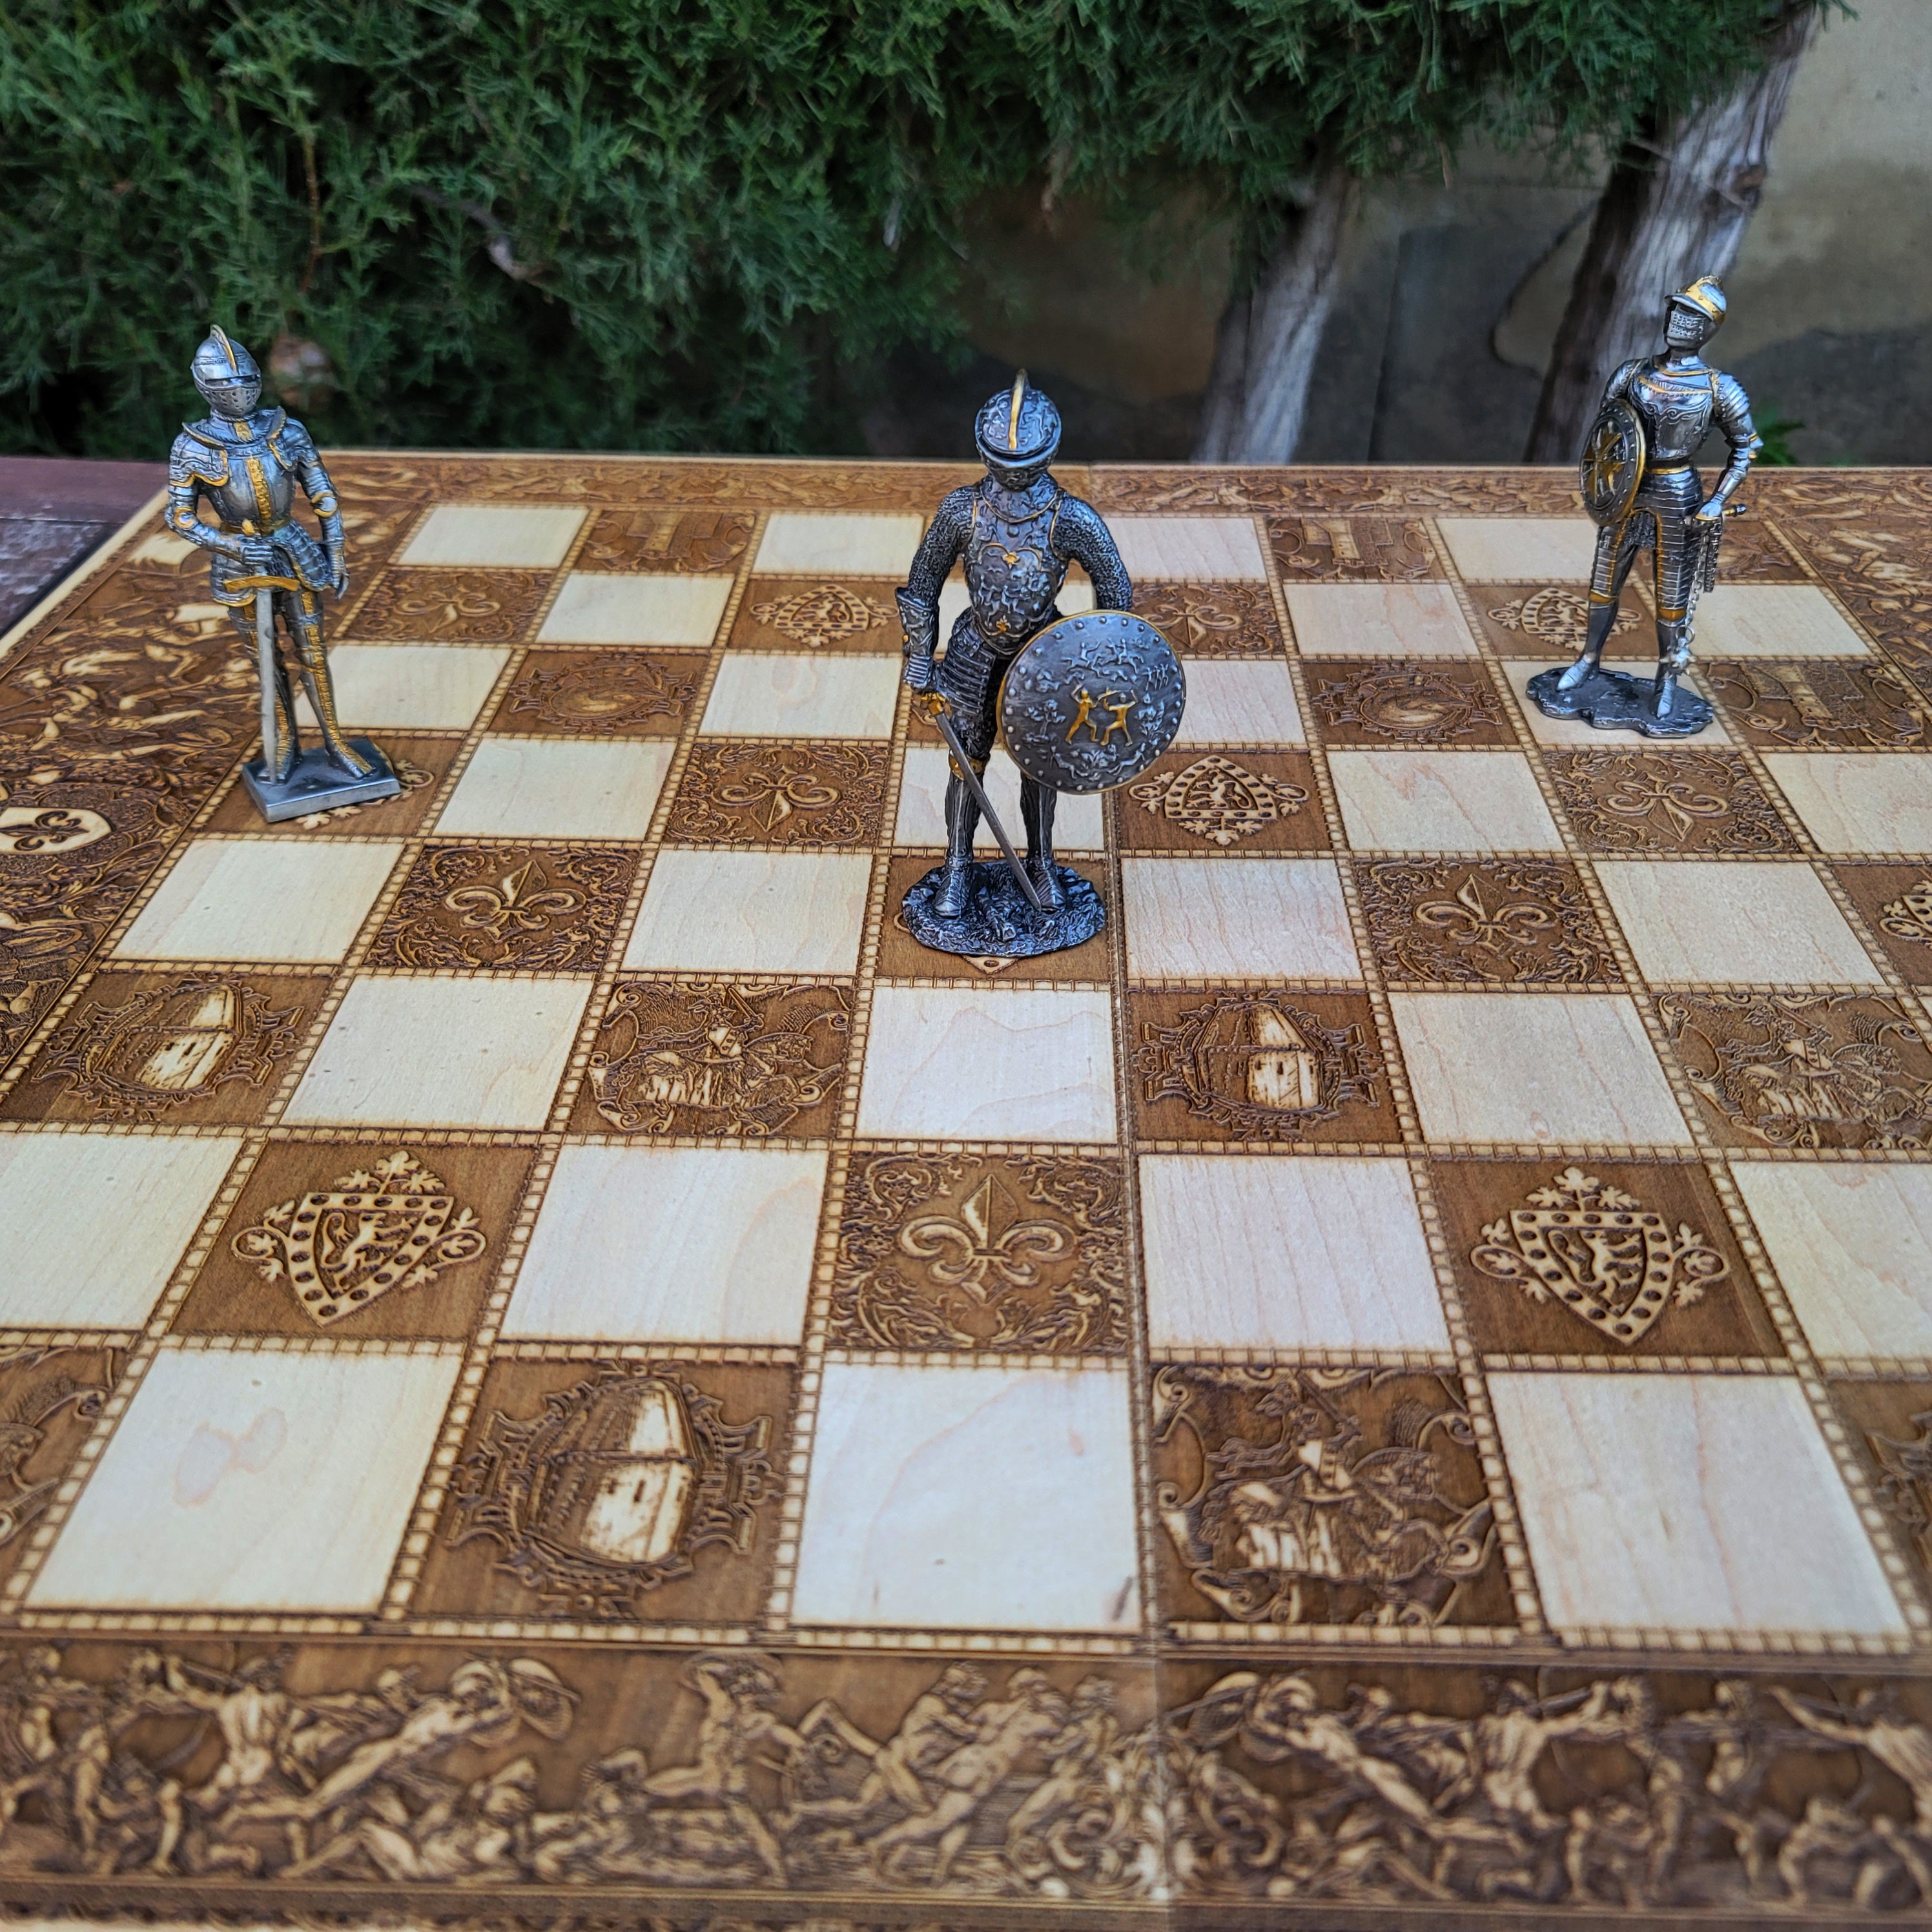 War Chess Board - Tournament Size